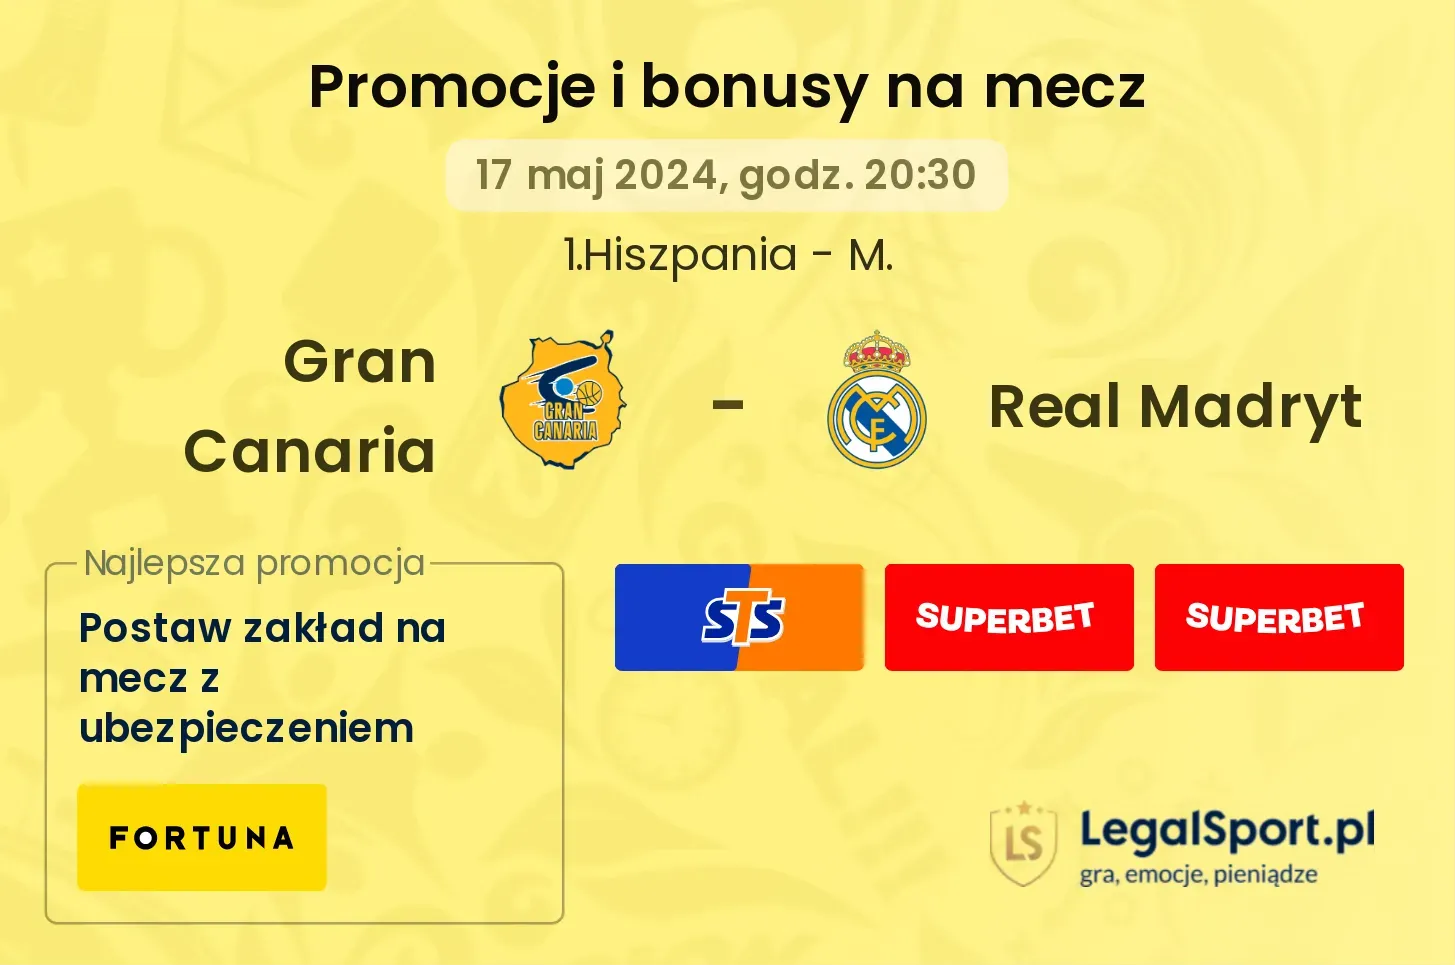 Gran Canaria - Real Madryt bonusy i promocje (17.05, 20:30)